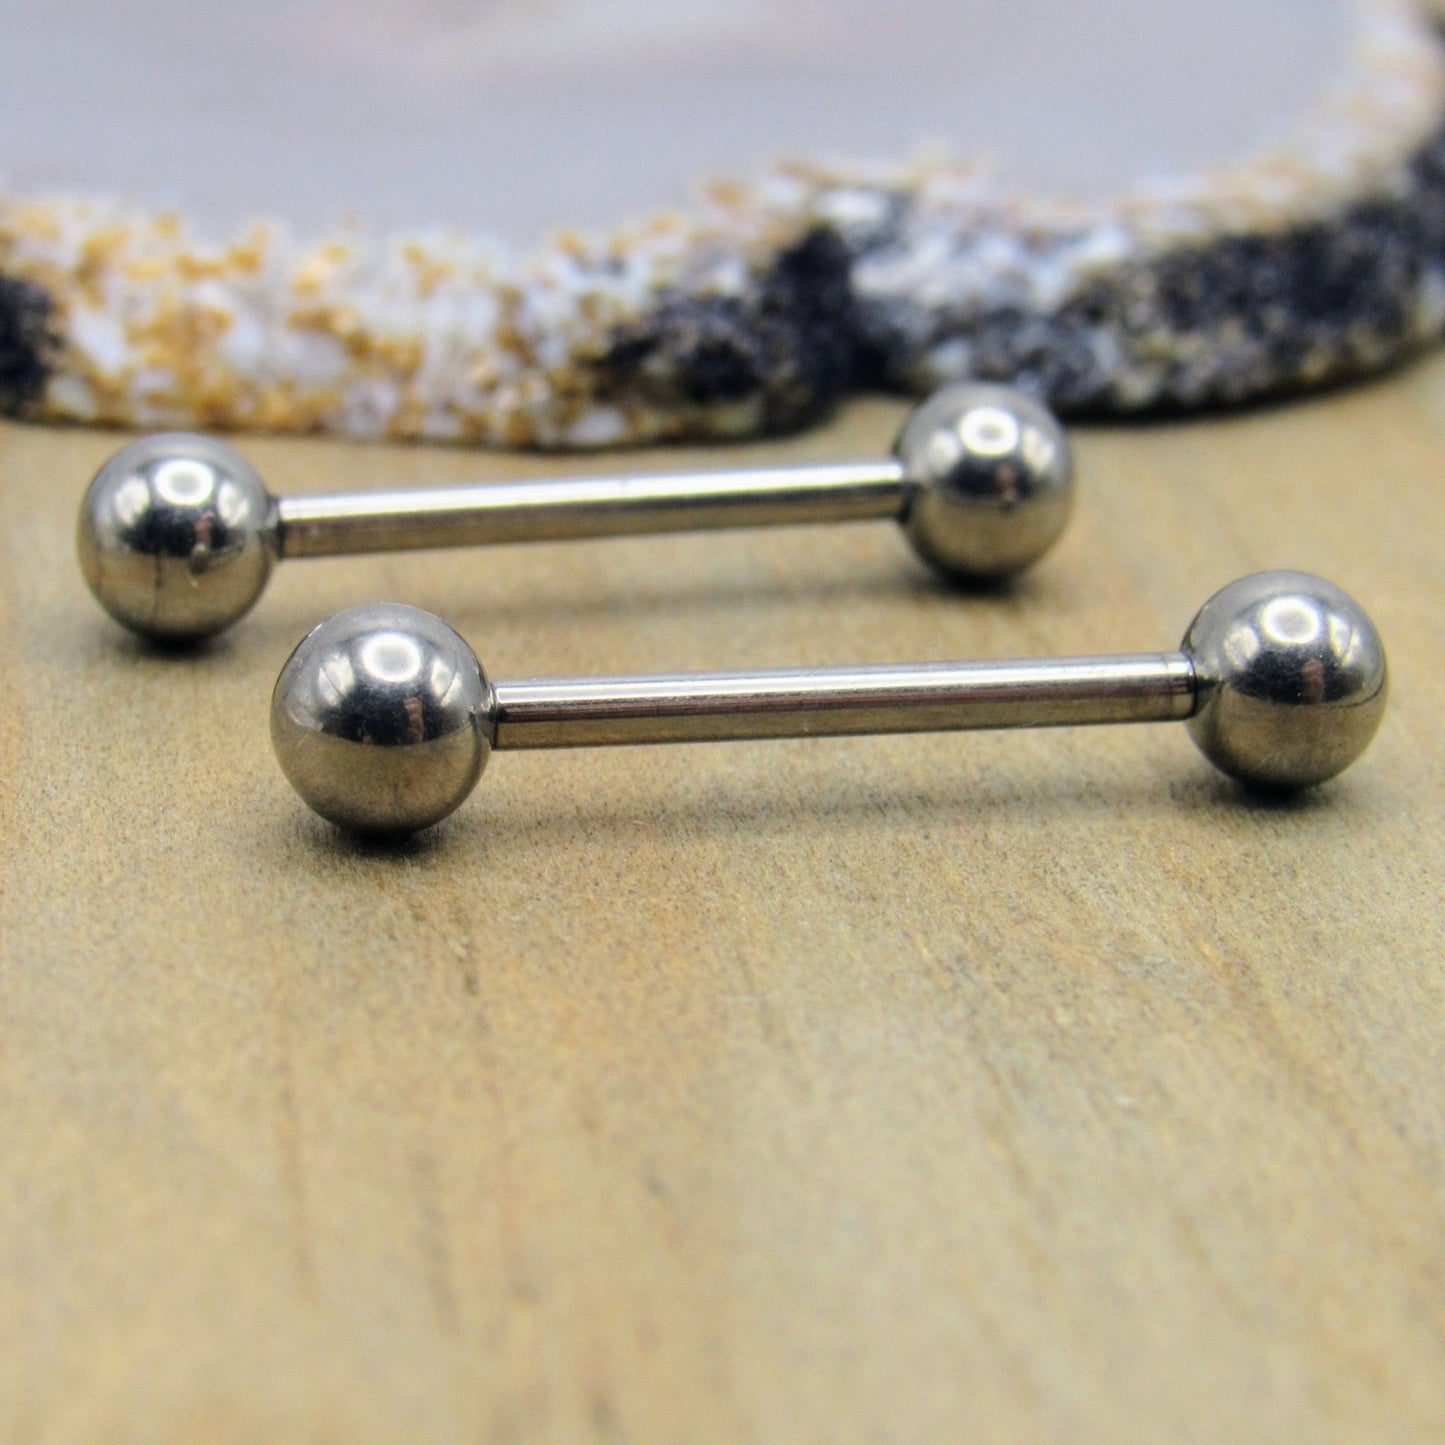 14g Titanium nipple piercing barbell set straight high polish silver internally threaded body jewelry pair - Siren Body Jewelry